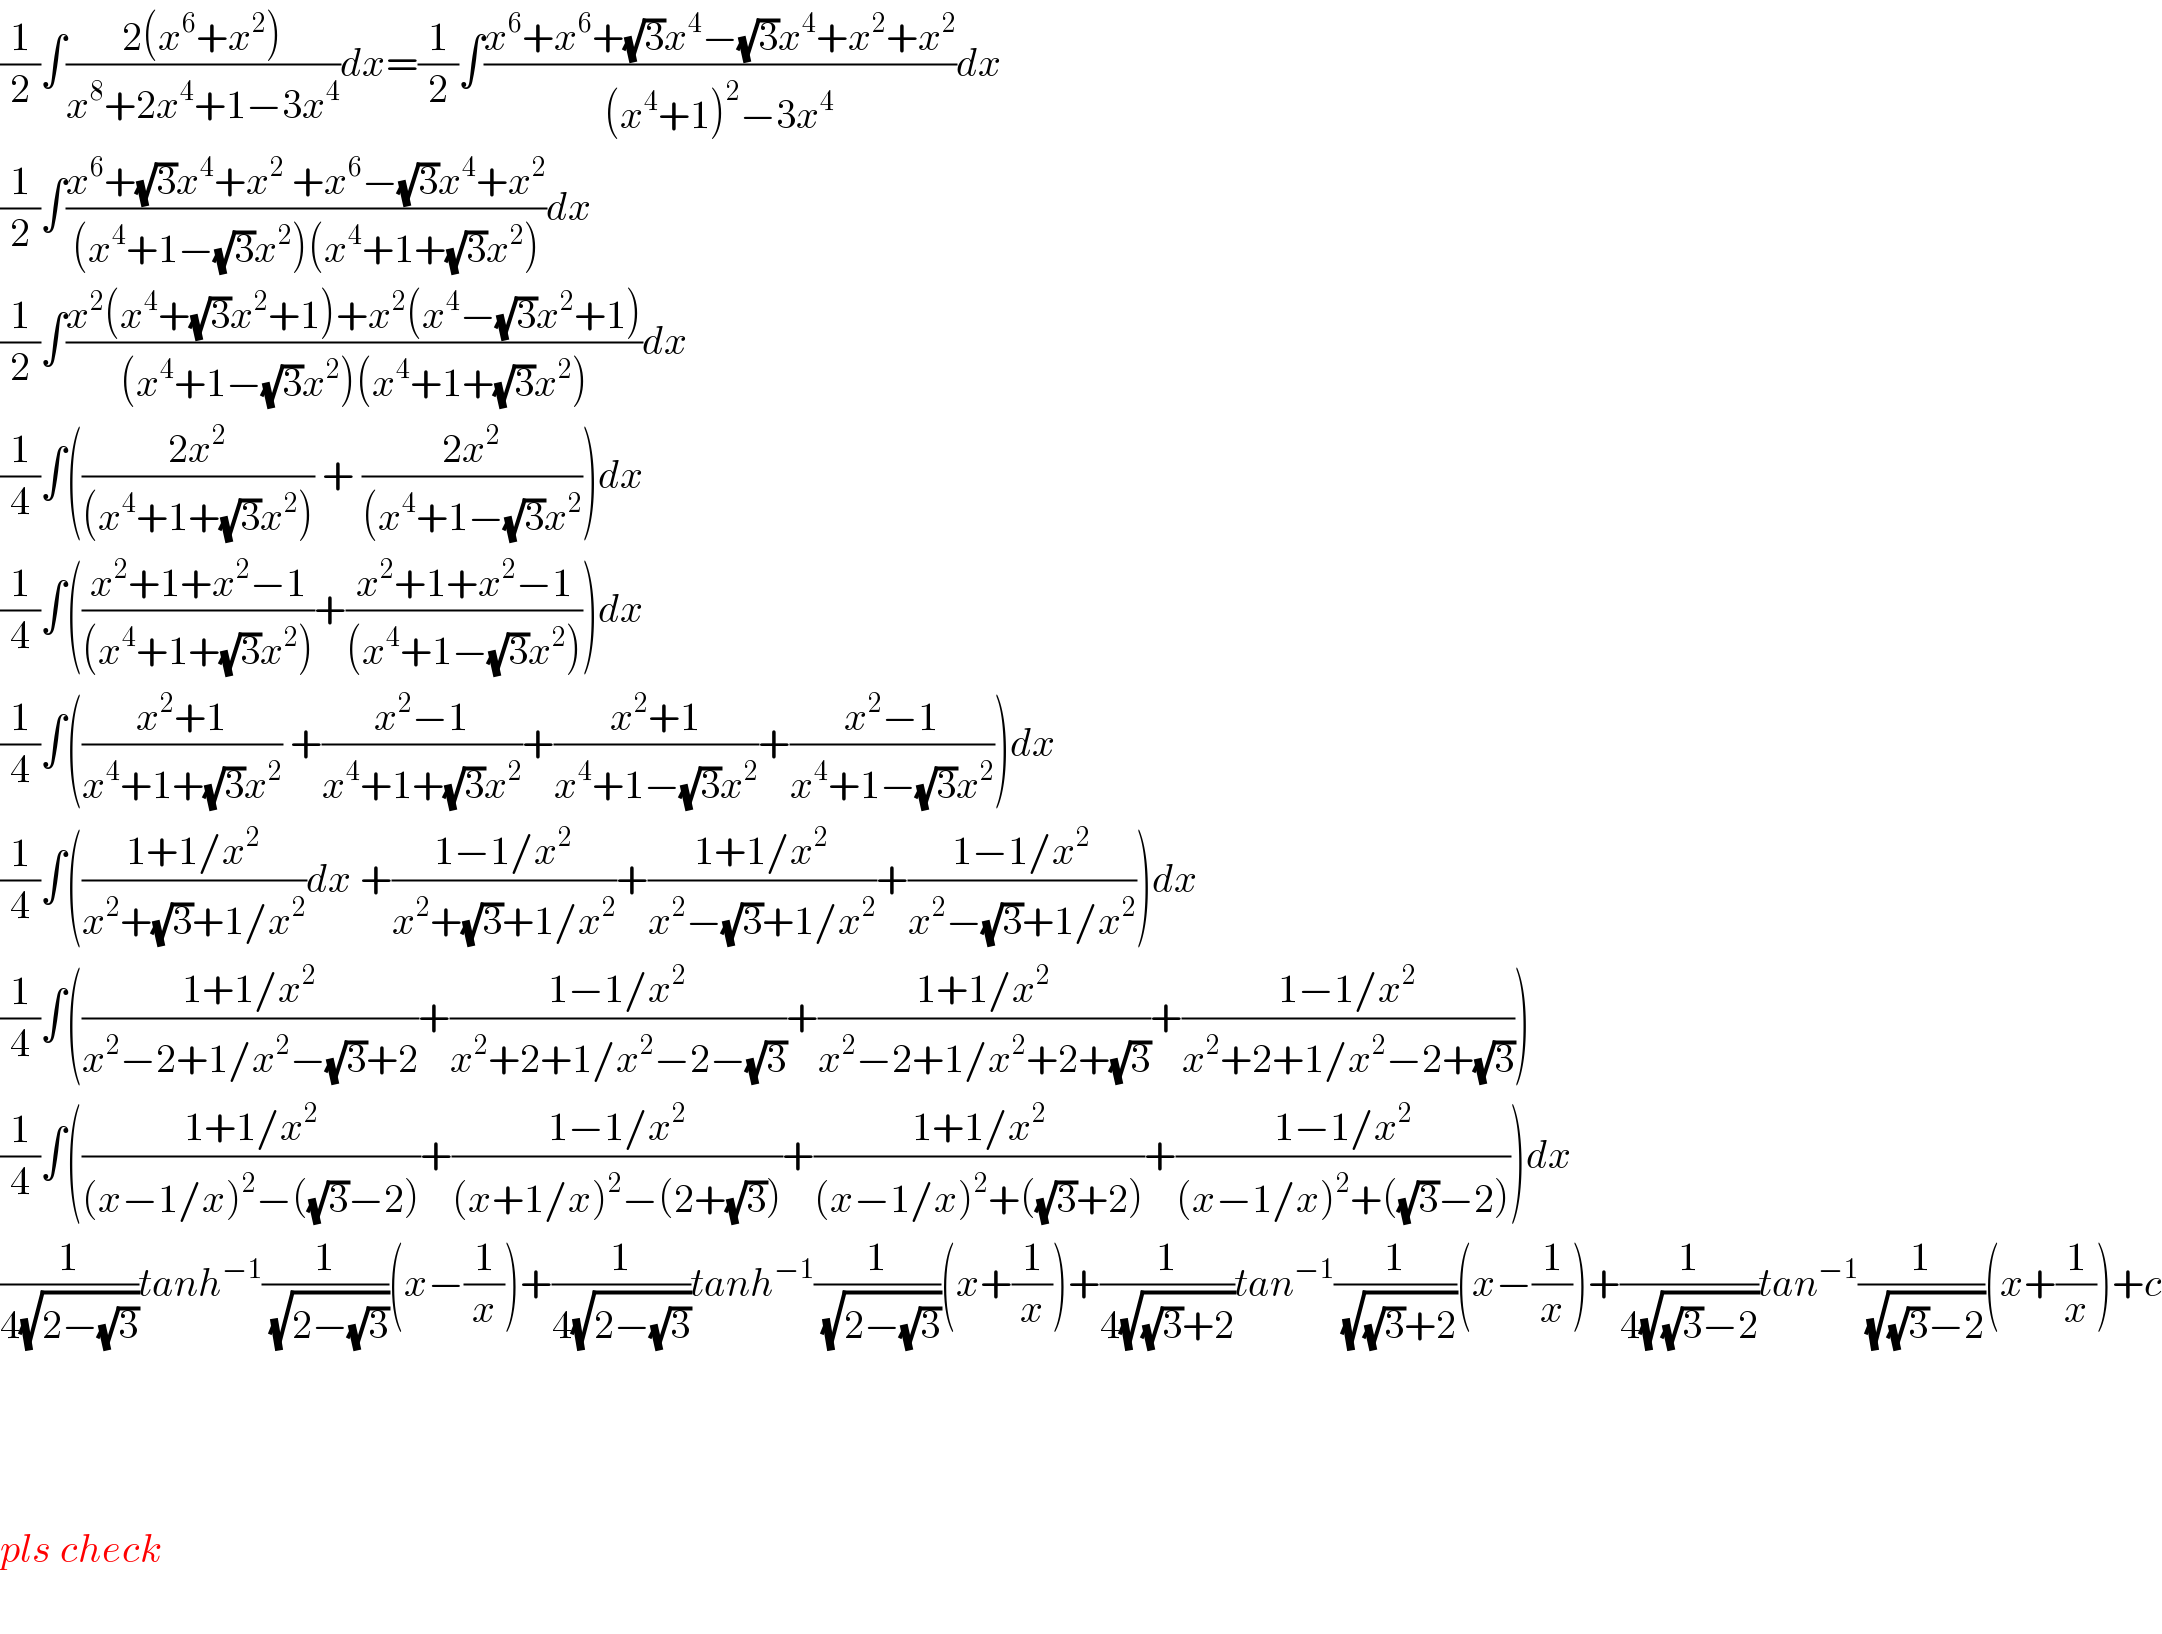 (1/2)∫((2(x^6 +x^2 ))/(x^8 +2x^4 +1−3x^4 ))dx=(1/2)∫((x^6 +x^6 +(√3)x^4 −(√3)x^4 +x^2 +x^2 )/((x^4 +1)^2 −3x^4 ))dx  (1/2)∫((x^6 +(√3)x^4 +x^2  +x^6 −(√3)x^4 +x^2 )/((x^4 +1−(√3)x^2 )(x^4 +1+(√3)x^2 )))dx  (1/2)∫((x^2 (x^4 +(√3)x^2 +1)+x^2 (x^4 −(√3)x^2 +1))/((x^4 +1−(√3)x^2 )(x^4 +1+(√3)x^2 )))dx  (1/4)∫(((2x^2 )/((x^4 +1+(√3)x^2 ))) + ((2x^2 )/((x^4 +1−(√3)x^2 )))dx  (1/4)∫(((x^2 +1+x^2 −1)/((x^4 +1+(√3)x^2 )))+((x^2 +1+x^2 −1)/((x^4 +1−(√3)x^2 ))))dx  (1/4)∫(((x^2 +1)/(x^4 +1+(√3)x^2 )) +((x^2 −1)/(x^4 +1+(√3)x^2 ))+((x^2 +1)/(x^4 +1−(√3)x^2 ))+((x^2 −1)/(x^4 +1−(√3)x^2 )))dx  (1/4)∫(((1+1/x^2 )/(x^2 +(√3)+1/x^2 ))dx +((1−1/x^2 )/(x^2 +(√3)+1/x^2 ))+((1+1/x^2 )/(x^2 −(√3)+1/x^2 ))+((1−1/x^2 )/(x^2 −(√3)+1/x^2 )))dx  (1/4)∫(((1+1/x^2 )/(x^2 −2+1/x^2 −(√3)+2))+((1−1/x^2 )/(x^2 +2+1/x^2 −2−(√3)))+((1+1/x^2 )/(x^2 −2+1/x^2 +2+(√3)))+((1−1/x^2 )/(x^2 +2+1/x^2 −2+(√3))))  (1/4)∫(((1+1/x^2 )/((x−1/x)^2 −((√3)−2)))+((1−1/x^2 )/((x+1/x)^2 −(2+(√3))))+((1+1/x^2 )/((x−1/x)^2 +((√3)+2)))+((1−1/x^2 )/((x−1/x)^2 +((√3)−2))))dx  (1/(4(√(2−(√3)))))tanh^(−1) (1/(√(2−(√3))))(x−(1/x))+(1/(4(√(2−(√3)))))tanh^(−1) (1/(√(2−(√3))))(x+(1/x))+(1/(4(√((√3)+2))))tan^(−1) (1/(√((√3)+2)))(x−(1/x))+(1/(4(√((√3)−2))))tan^(−1) (1/(√((√3)−2)))(x+(1/x))+c        pls check    